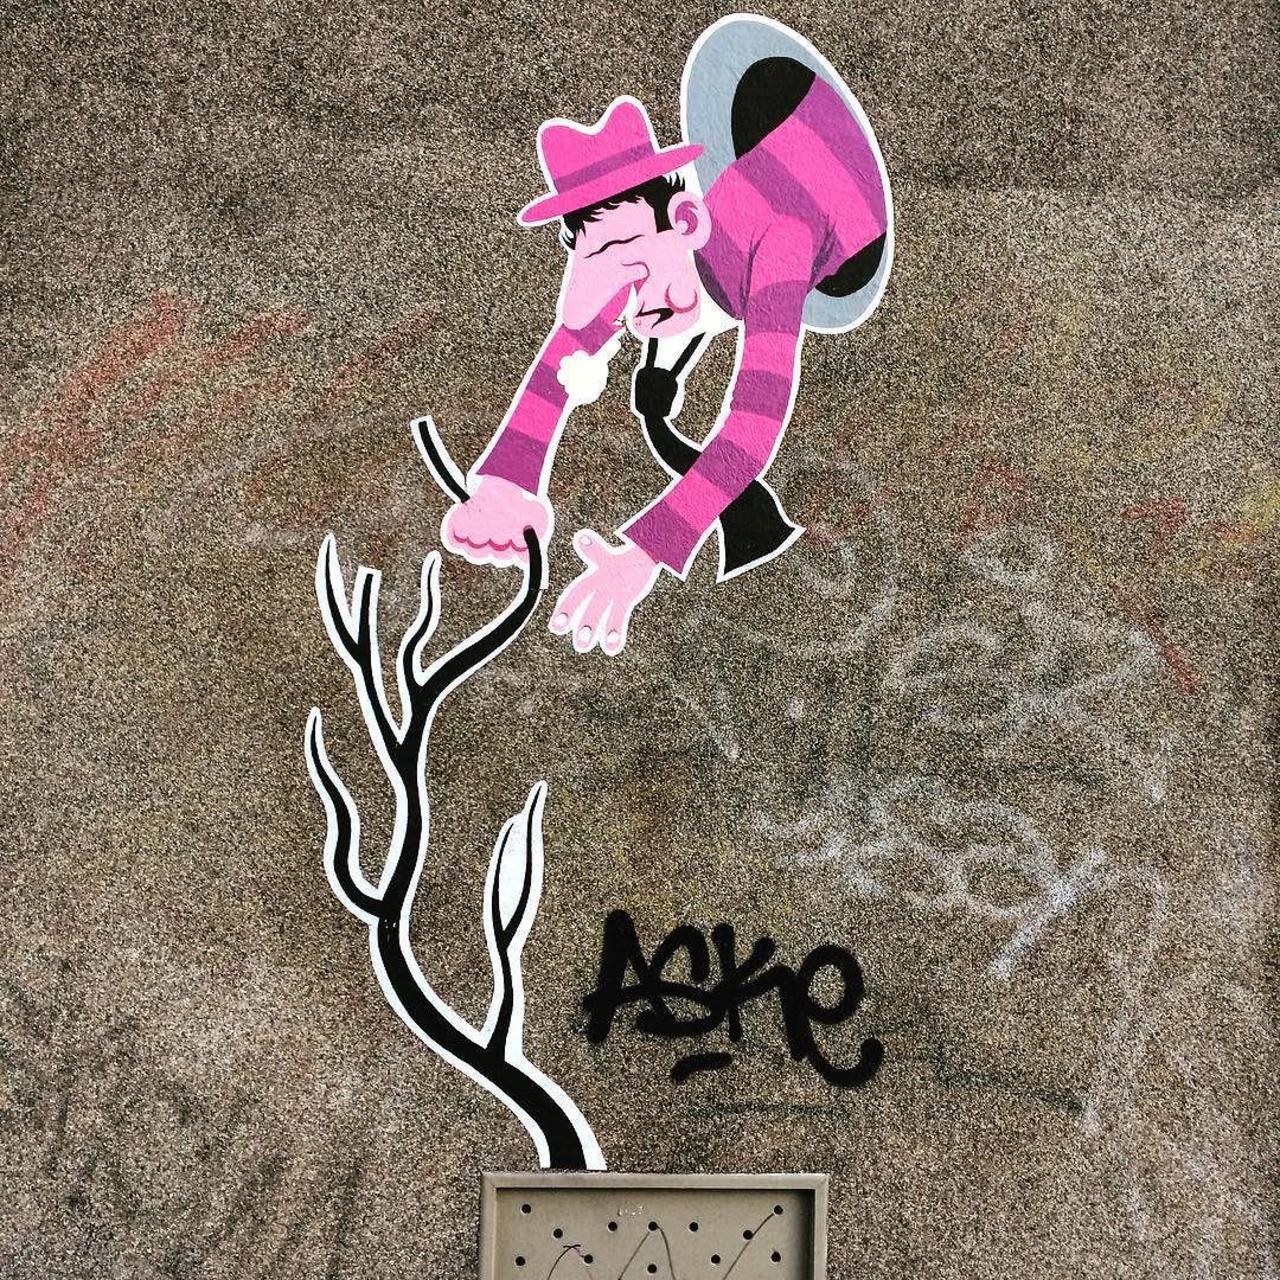 #Paris #graffiti photo by @elricoelmagnifico http://ift.tt/1KG72ko #StreetArt http://t.co/C2mcc2oSxV